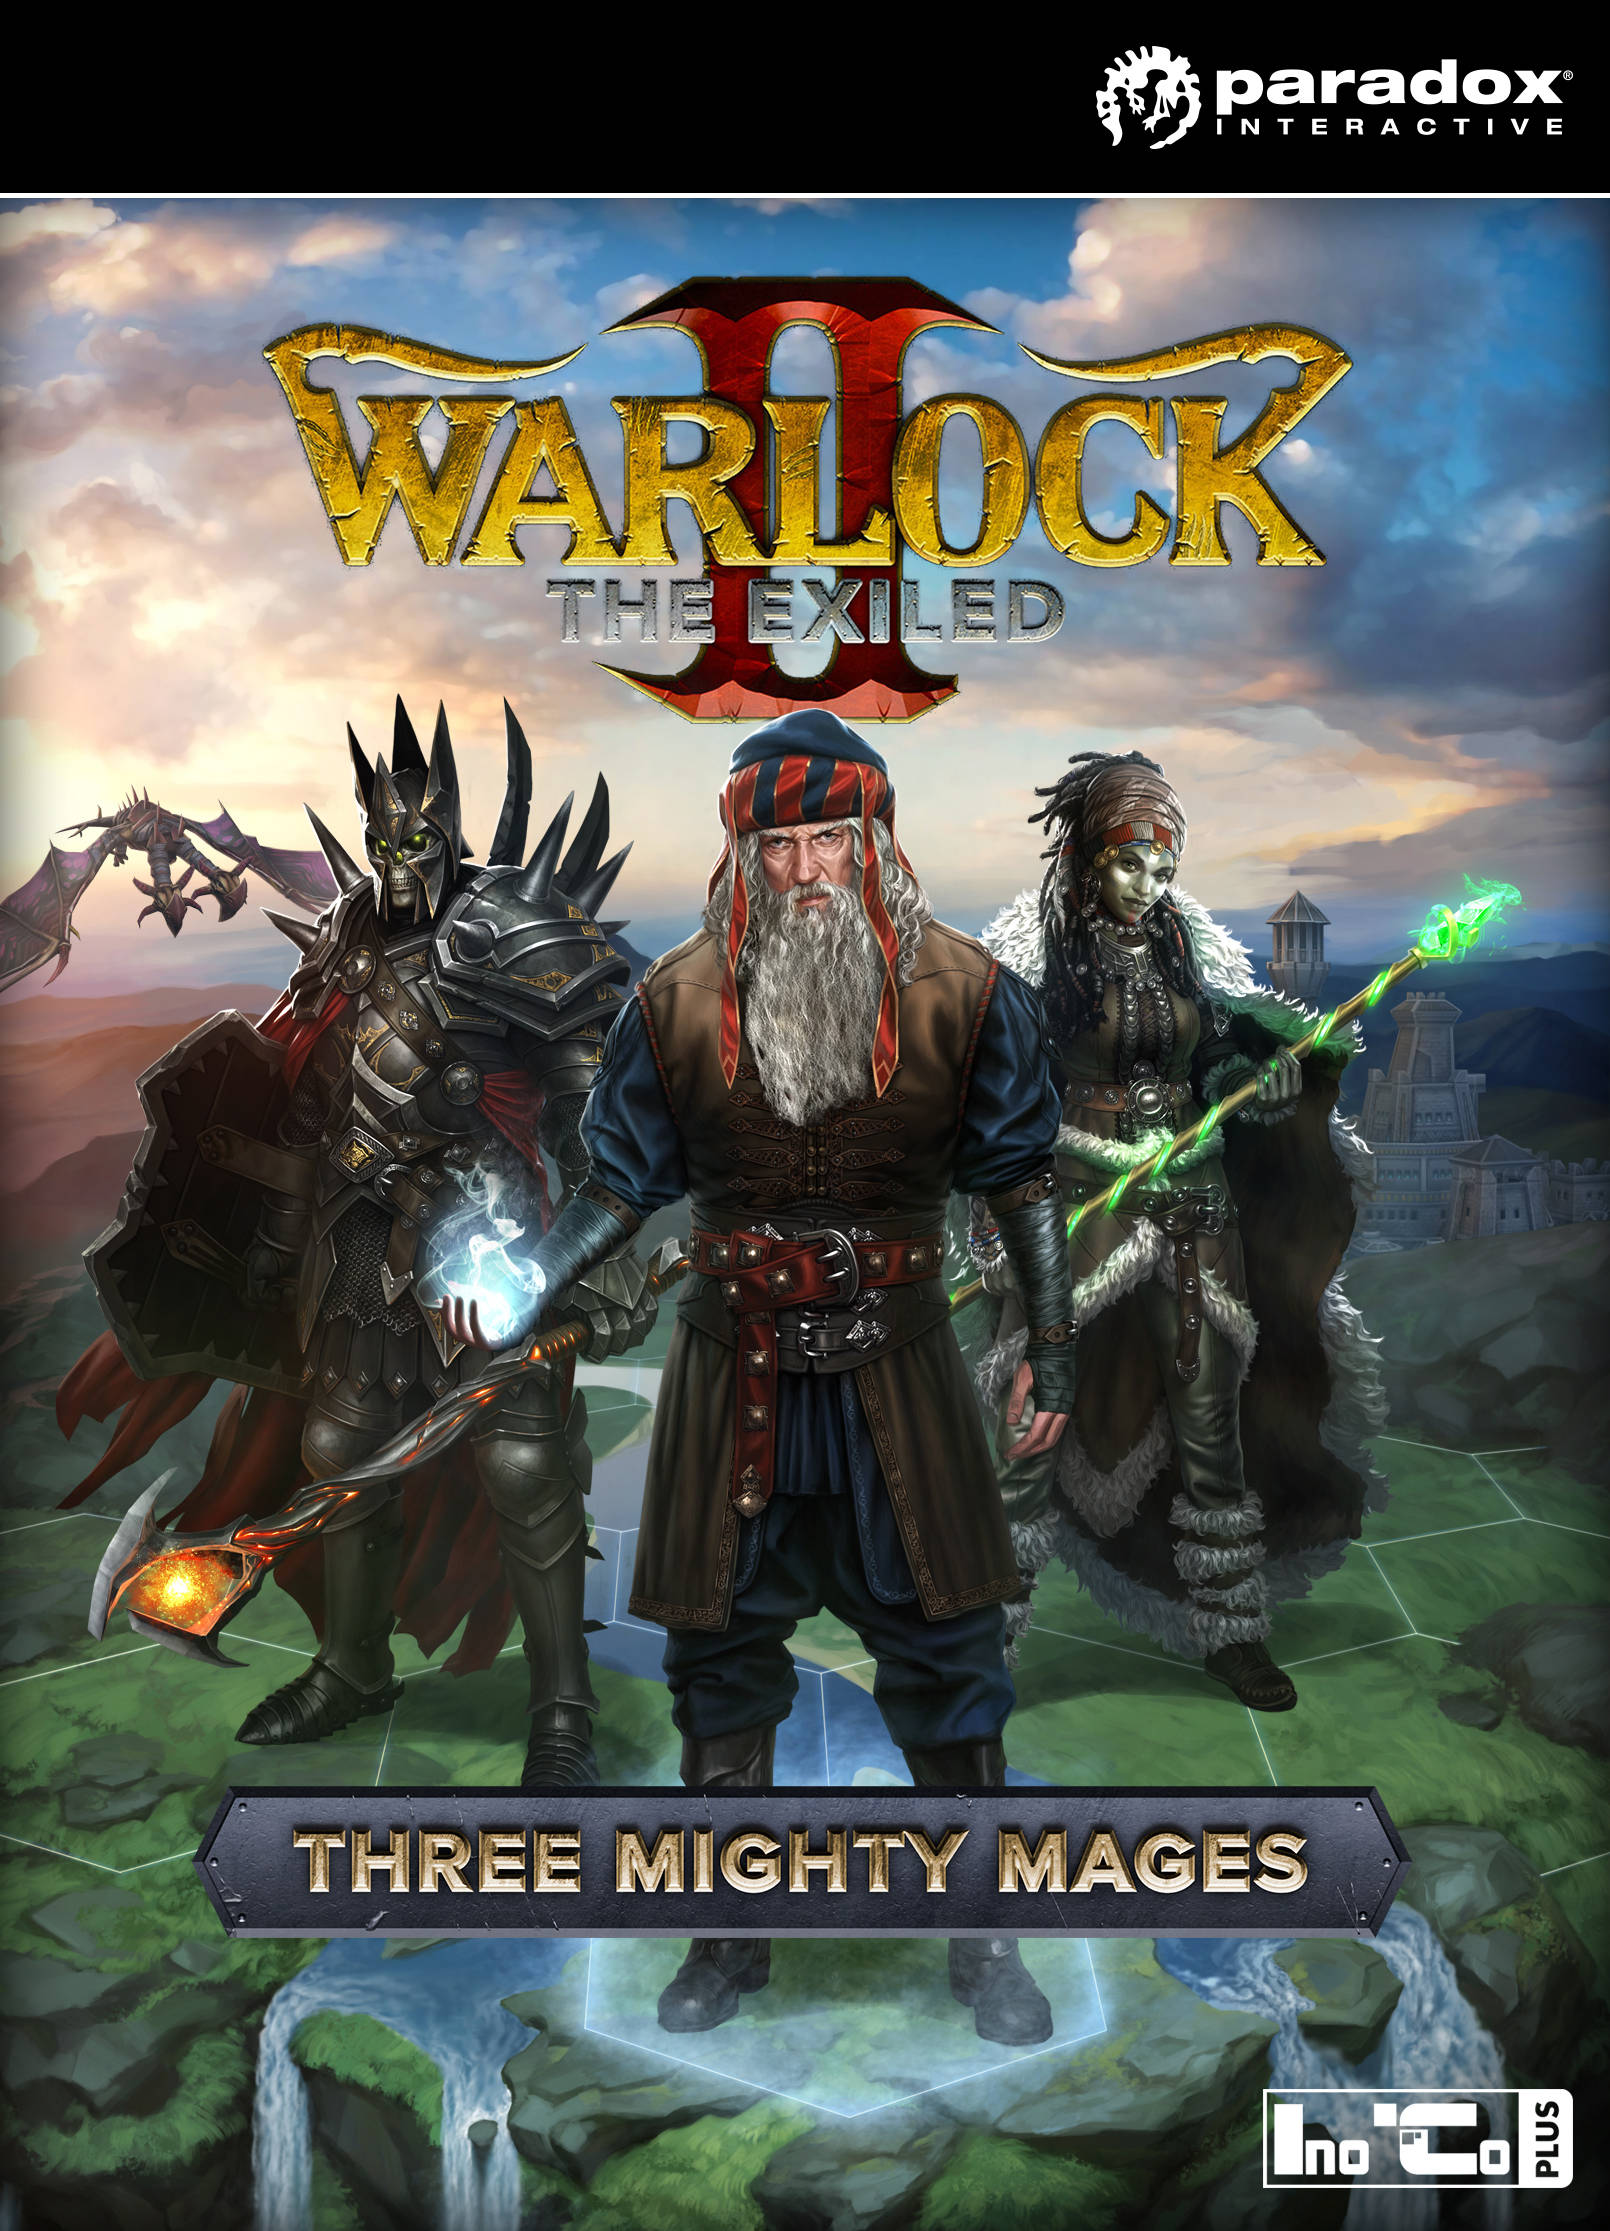 Warlock 2: Three Mighty Mages